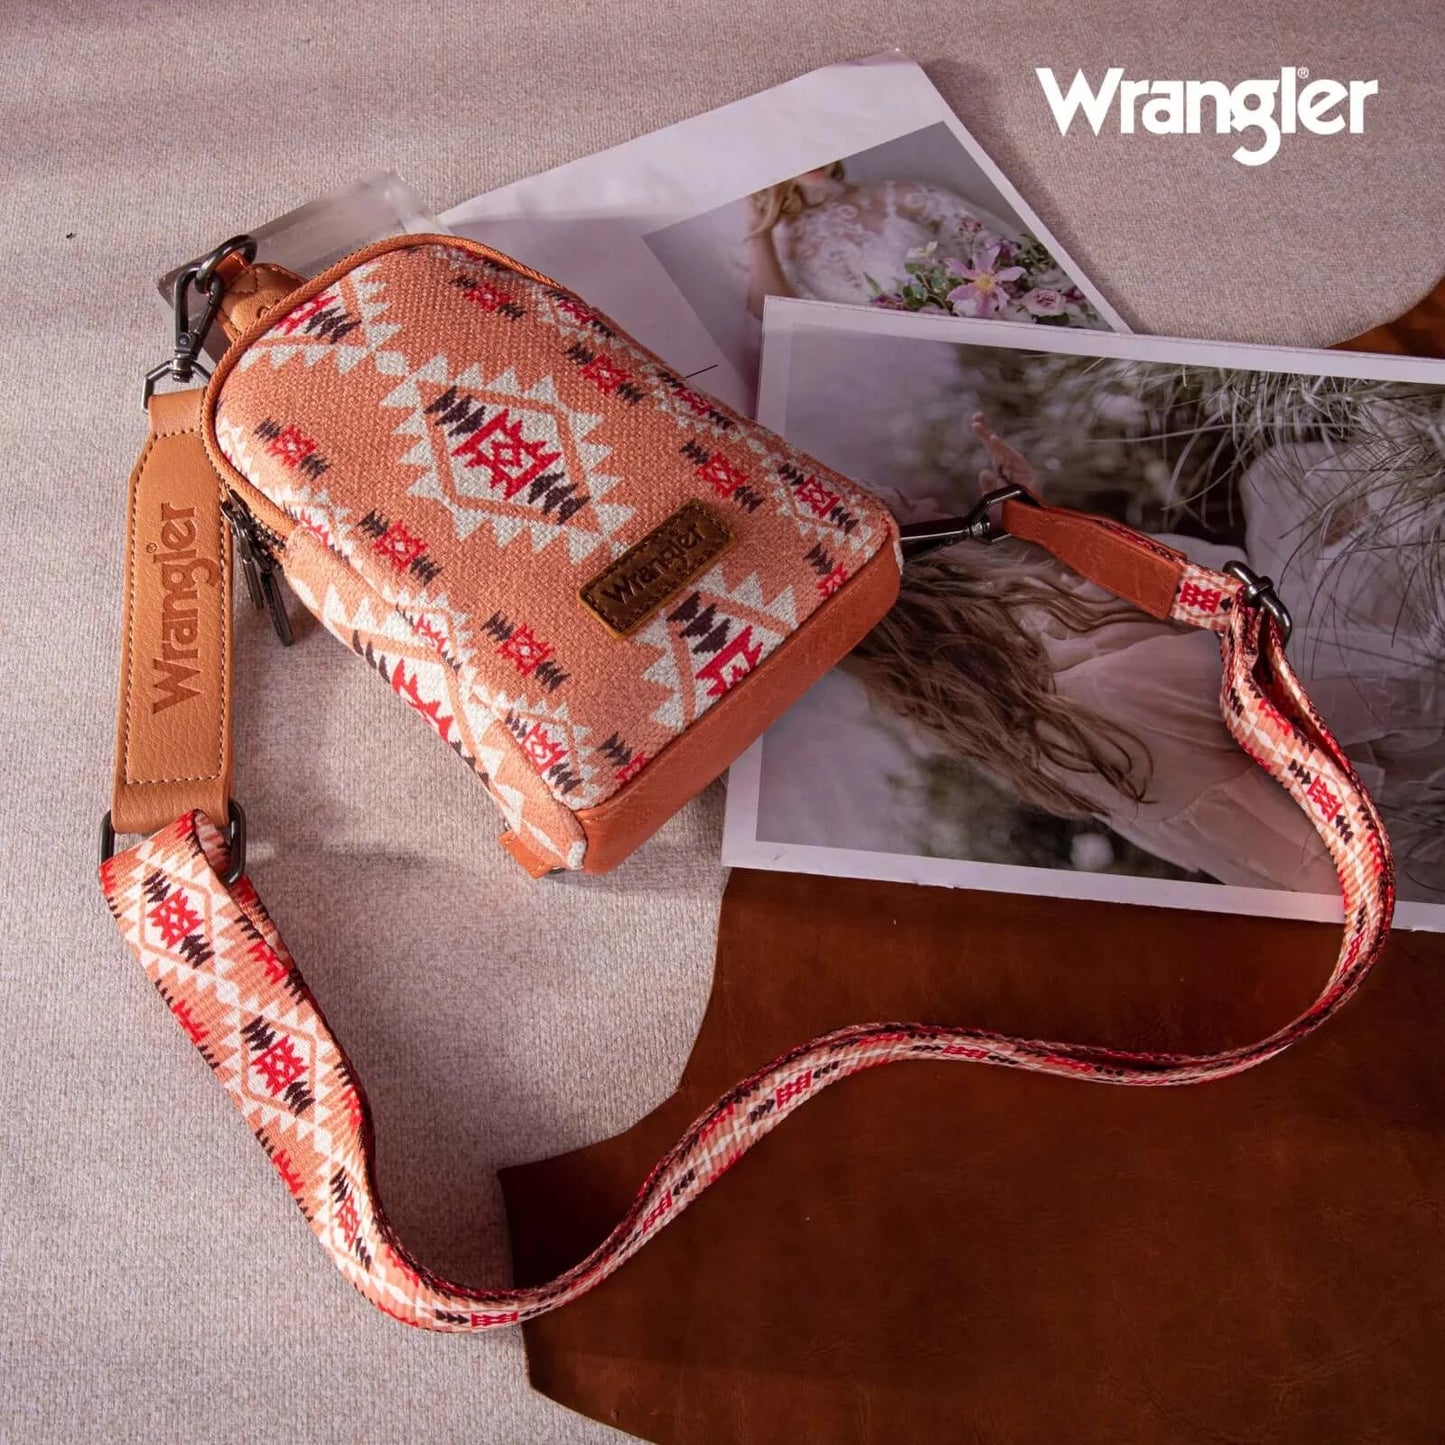 Wrangler-aztec-crossbody-sling-bag-front-on-floor-view-orange